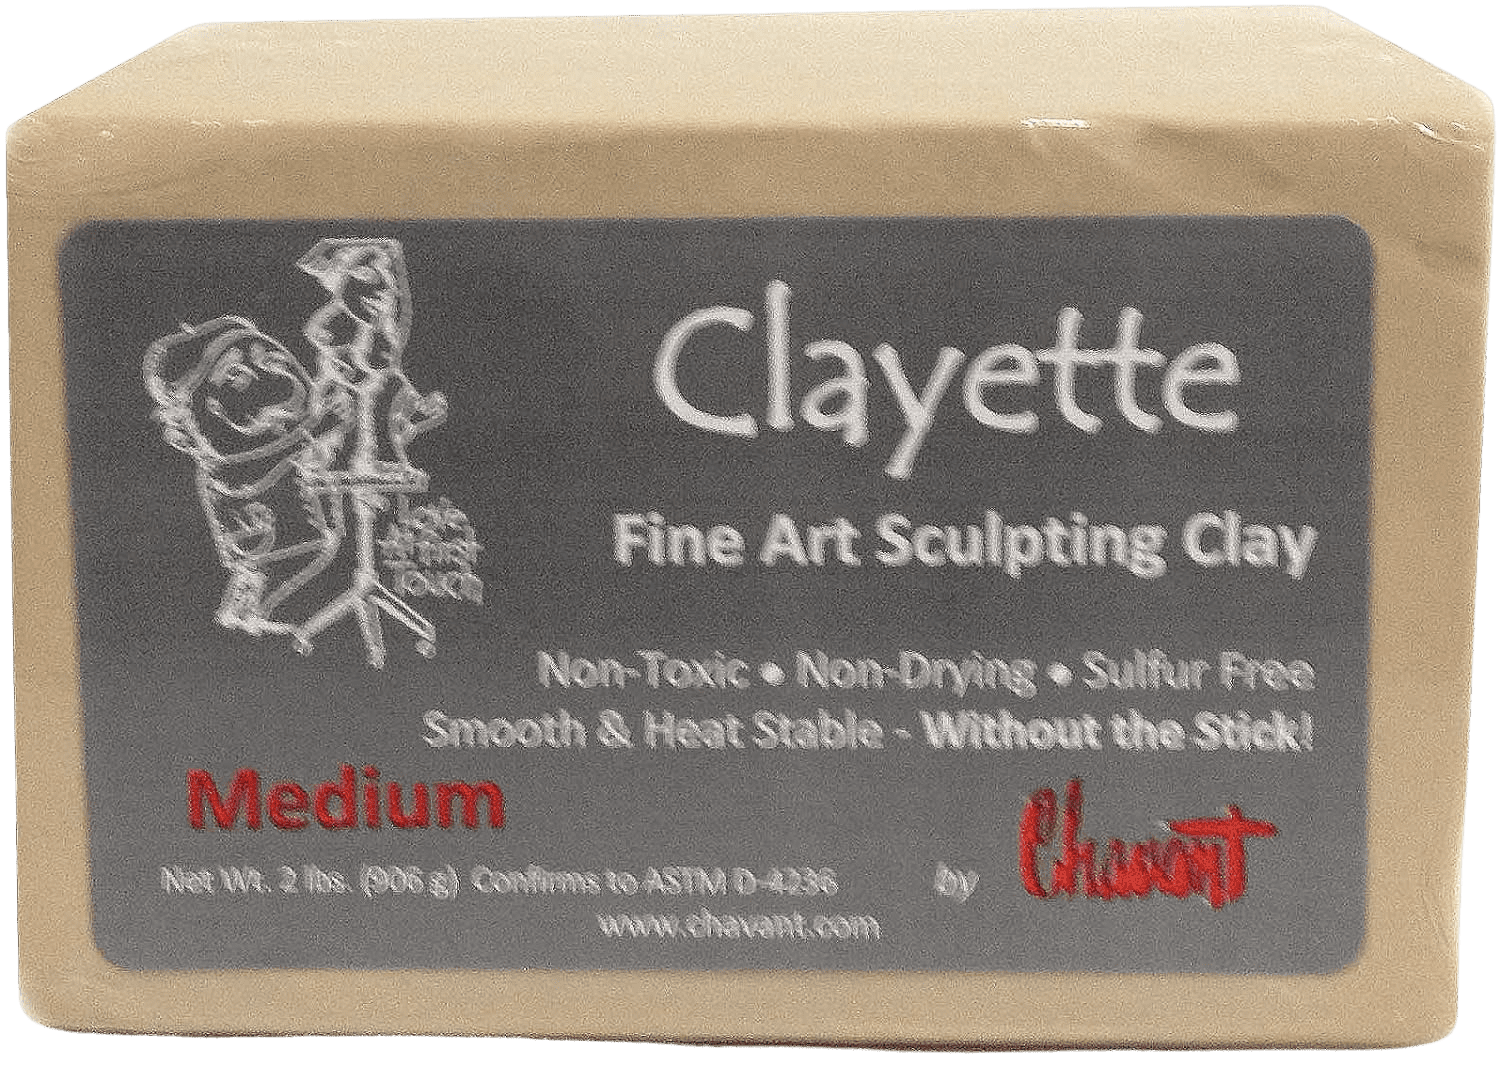 NSP Chavant CLAYETTE Medium Professional Oil Based Sulfur Free Sculpting Clay